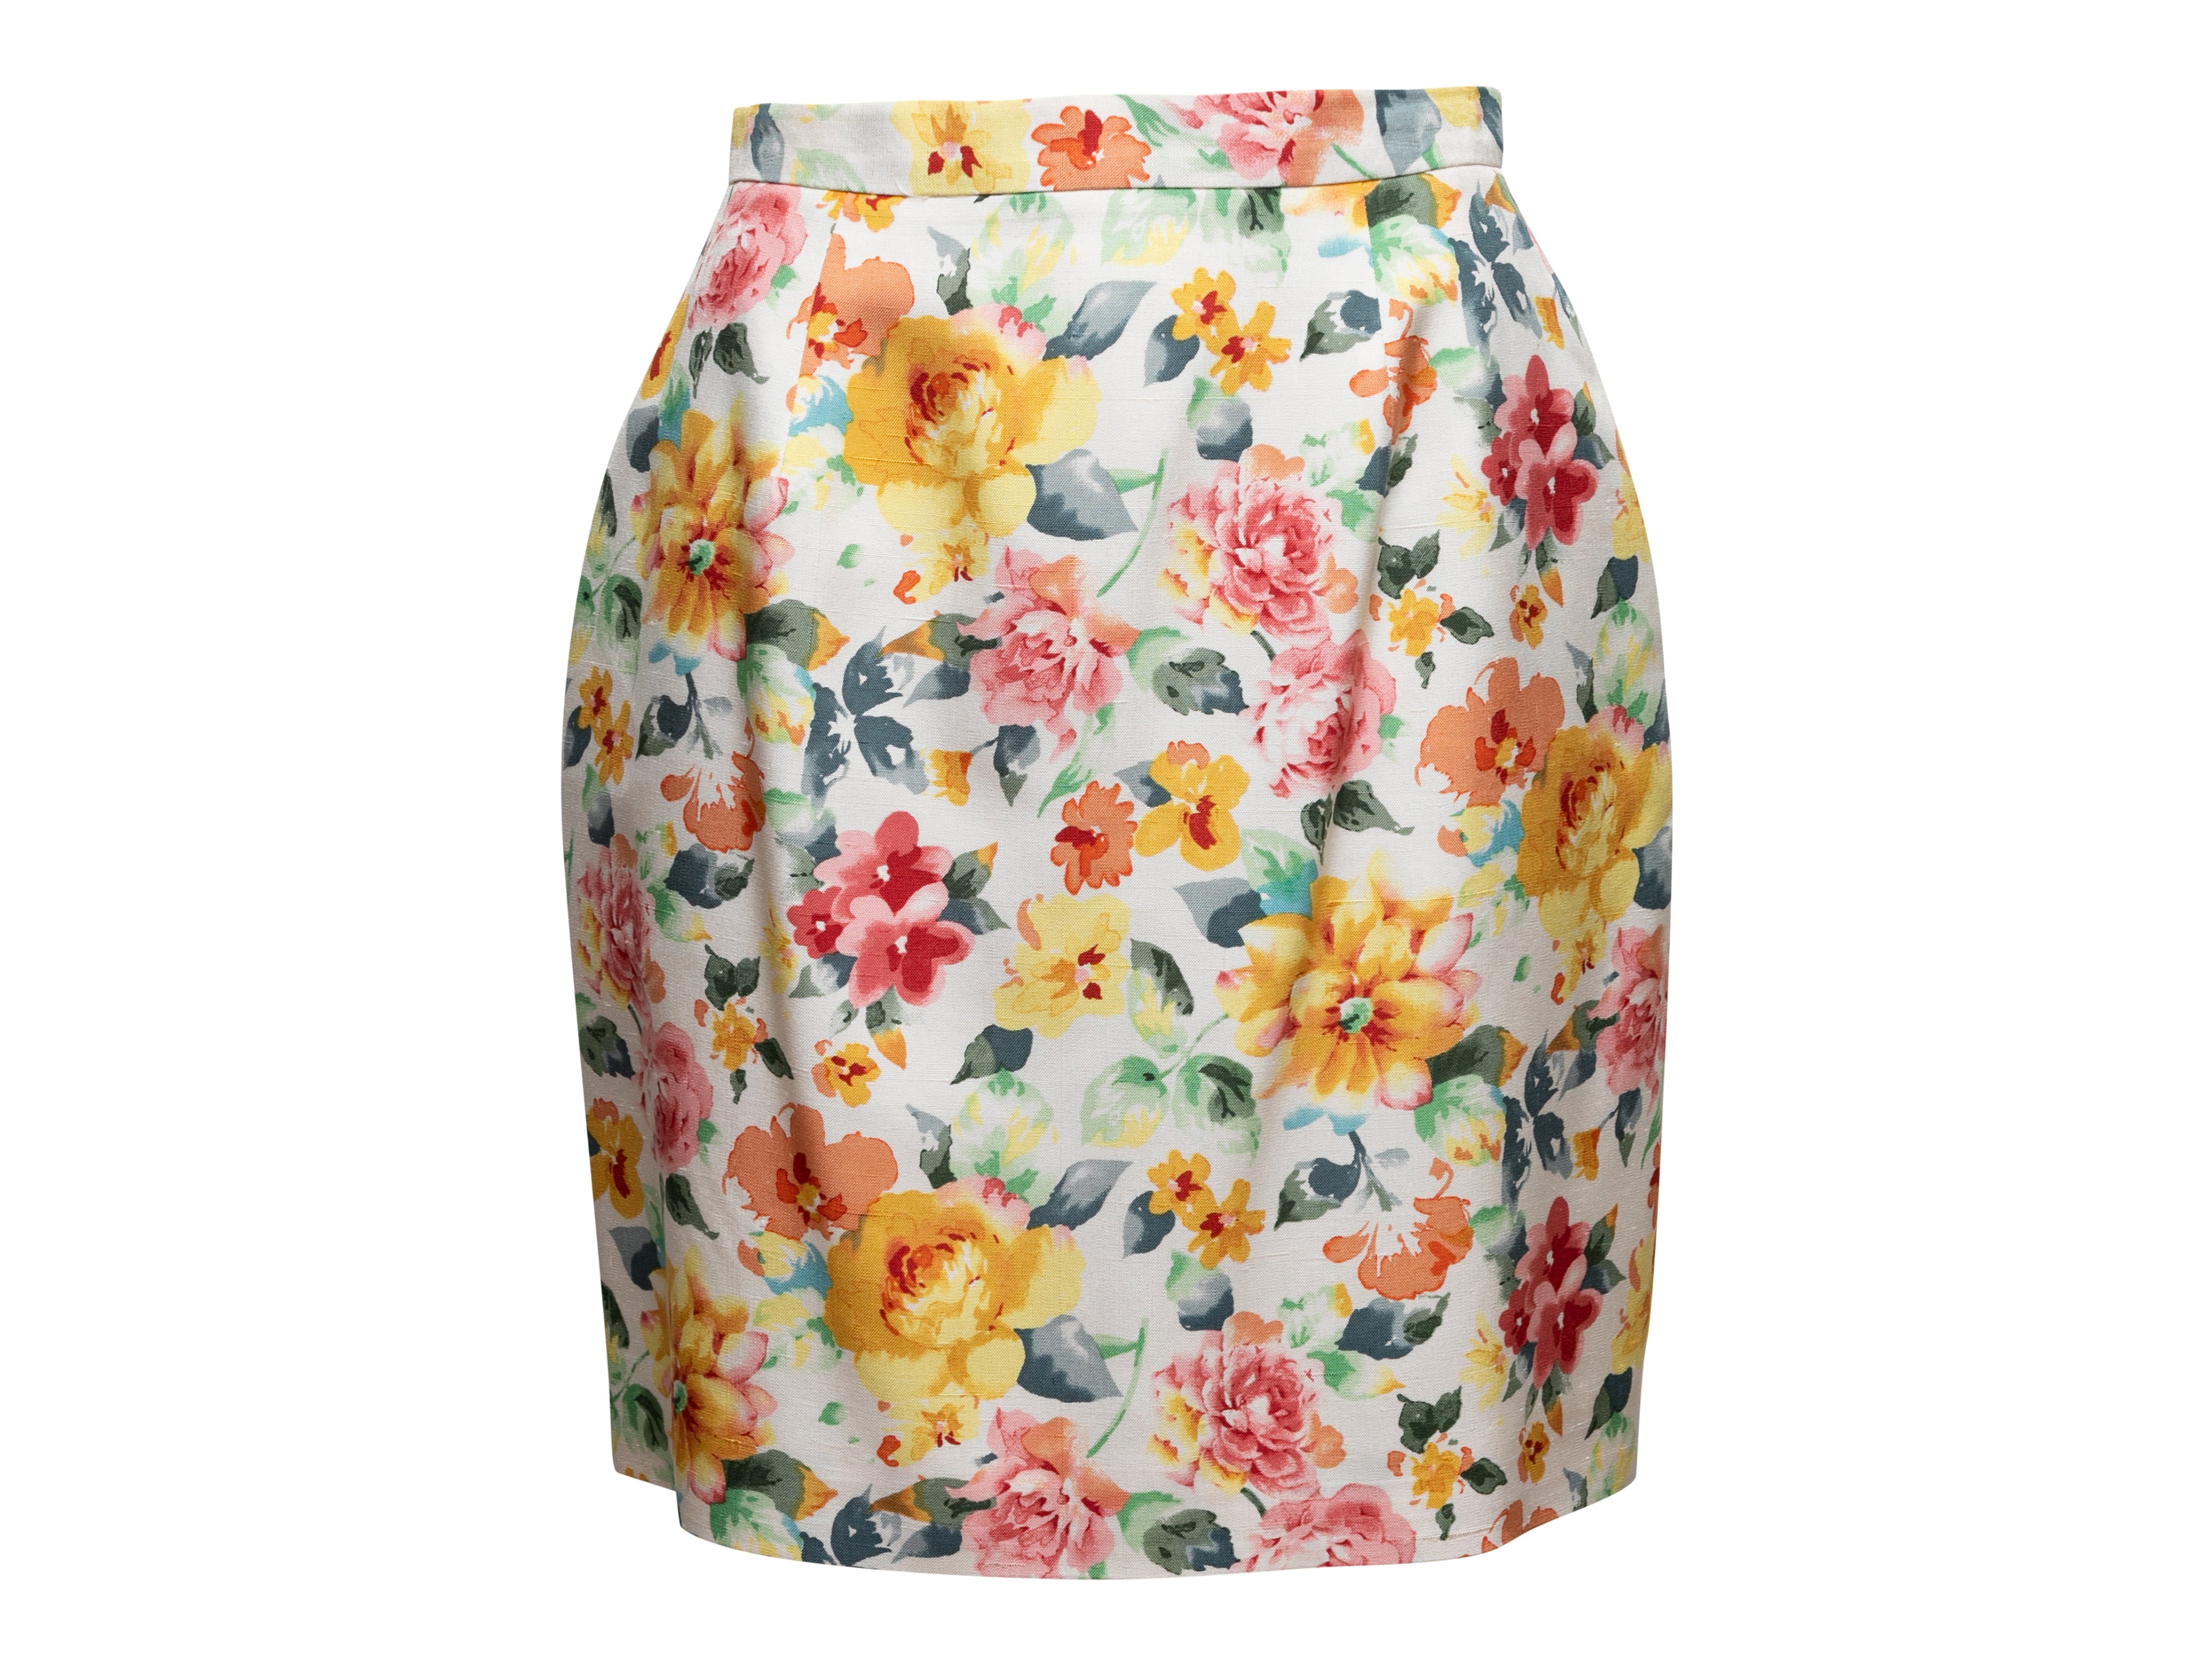 Multicolor Floral Print Skirt Size US 8